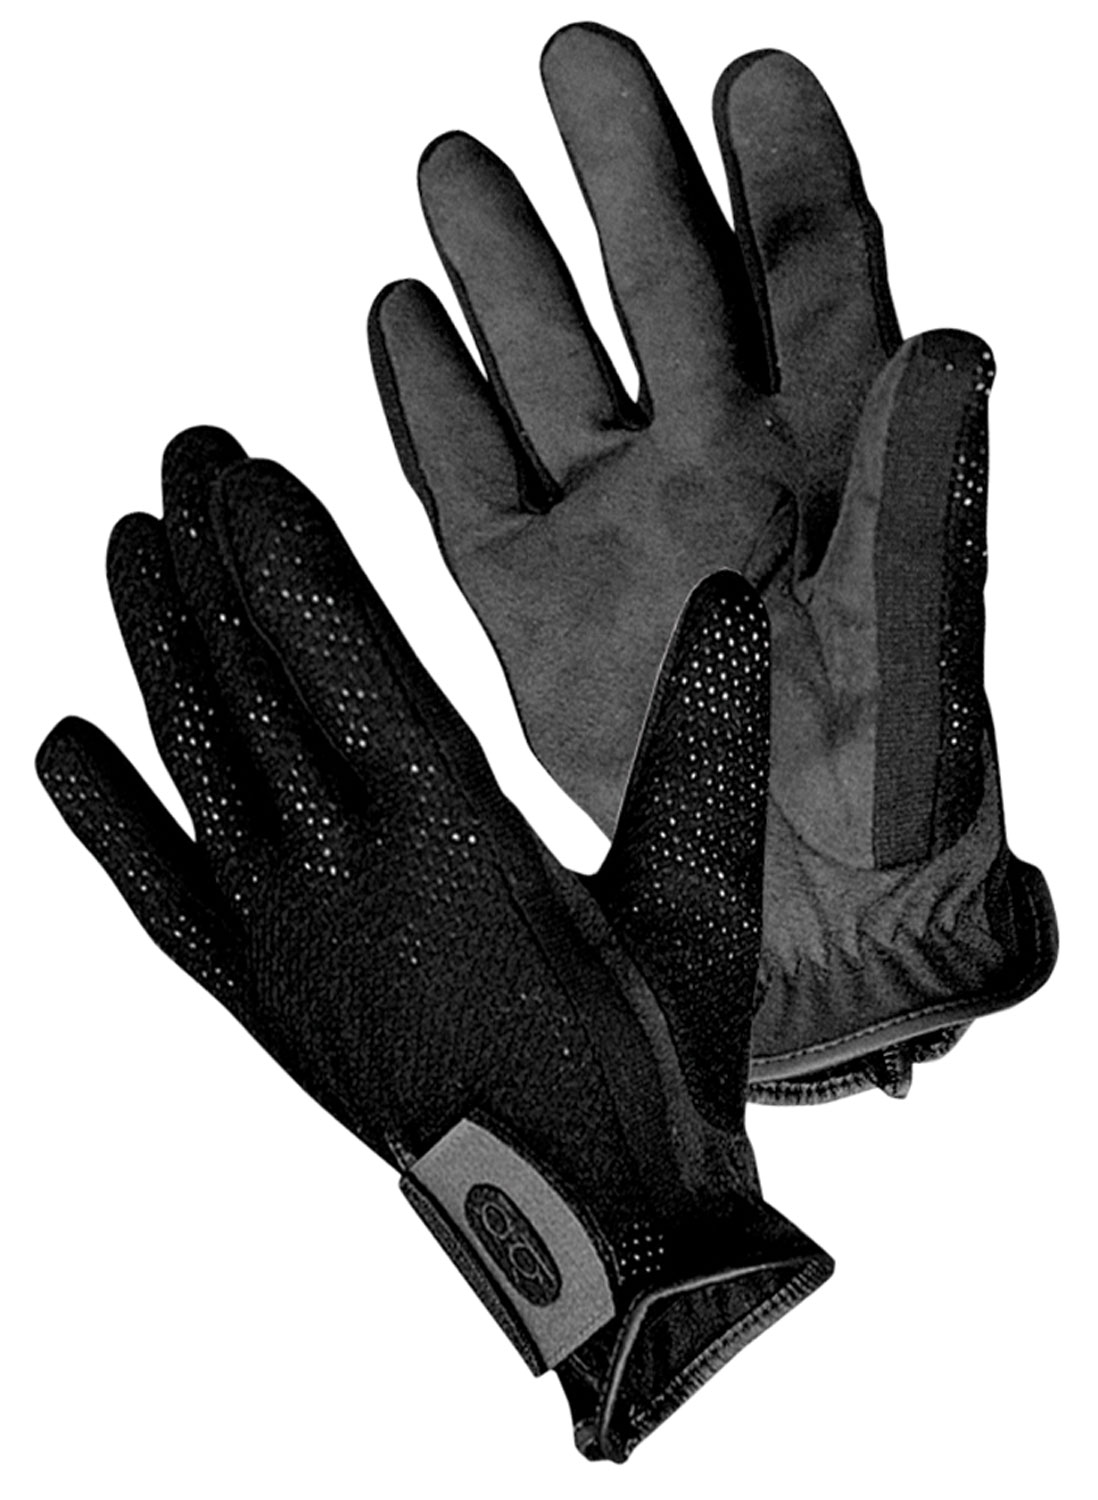 Bob Allen 10537 Shotgunner Glove  Black Synthetic/Elastic/Suede Medium